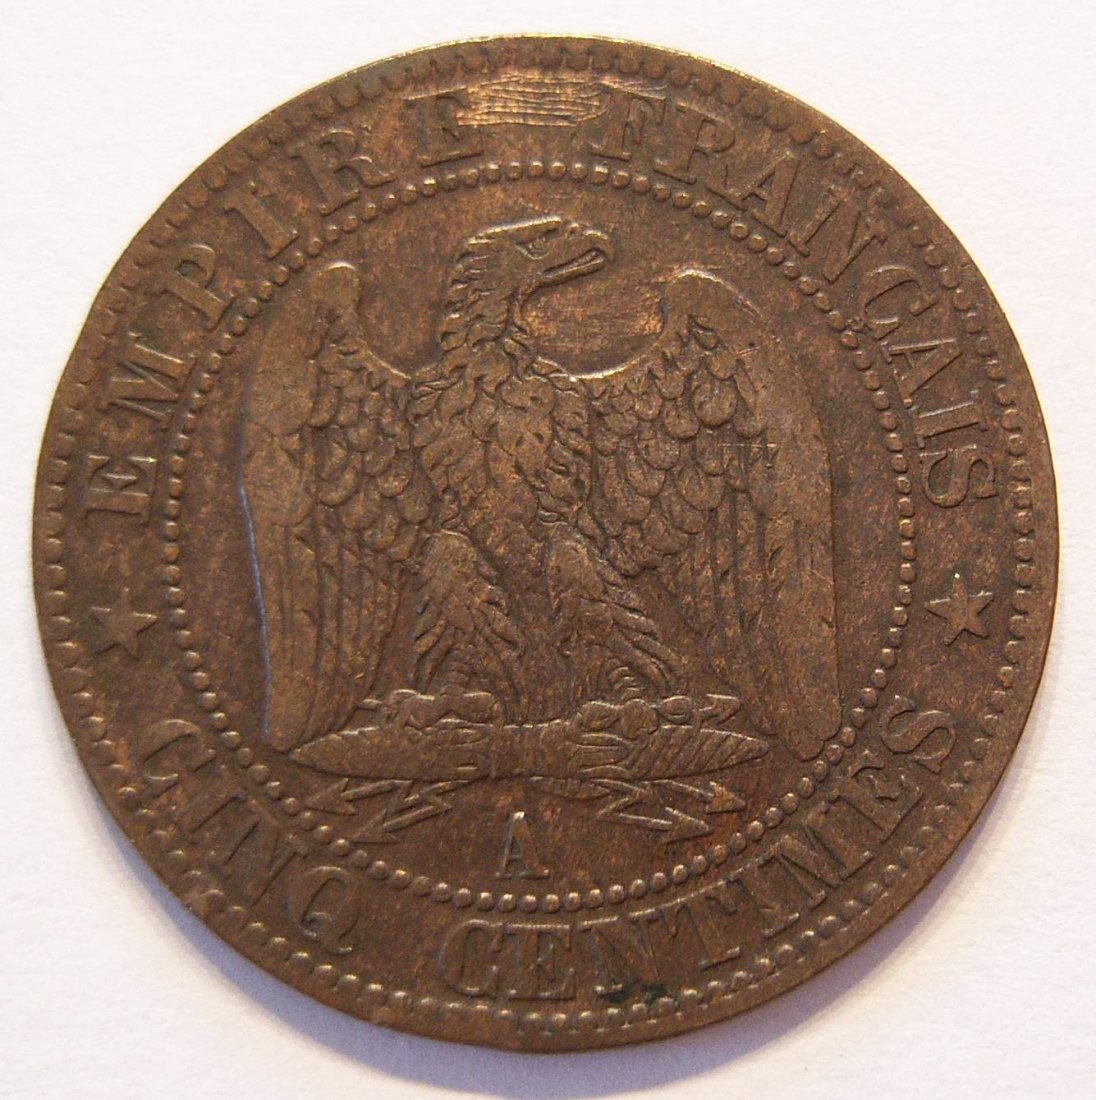  Frankreich 5 Centimes 1854 A   